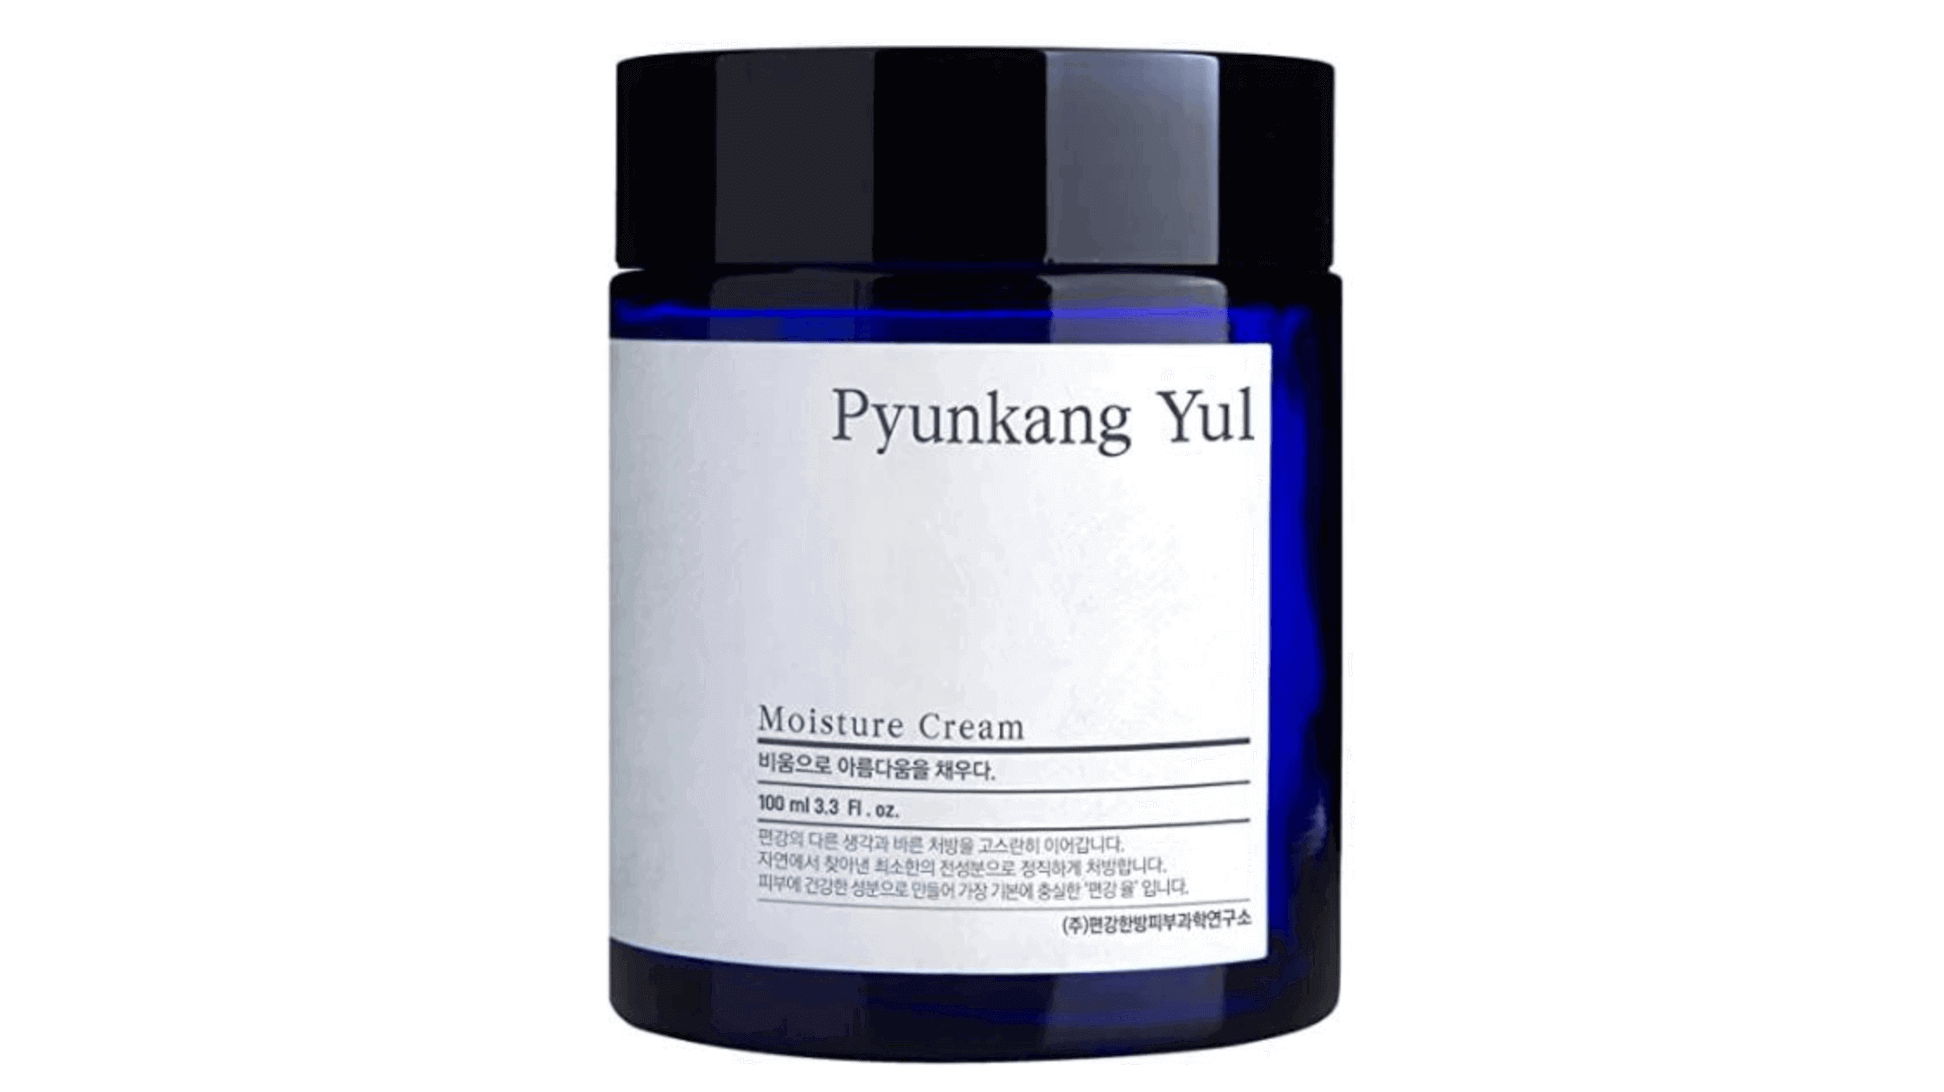 Pyunkang Yul Moisture Cream (100ml) - Holistica Beauty